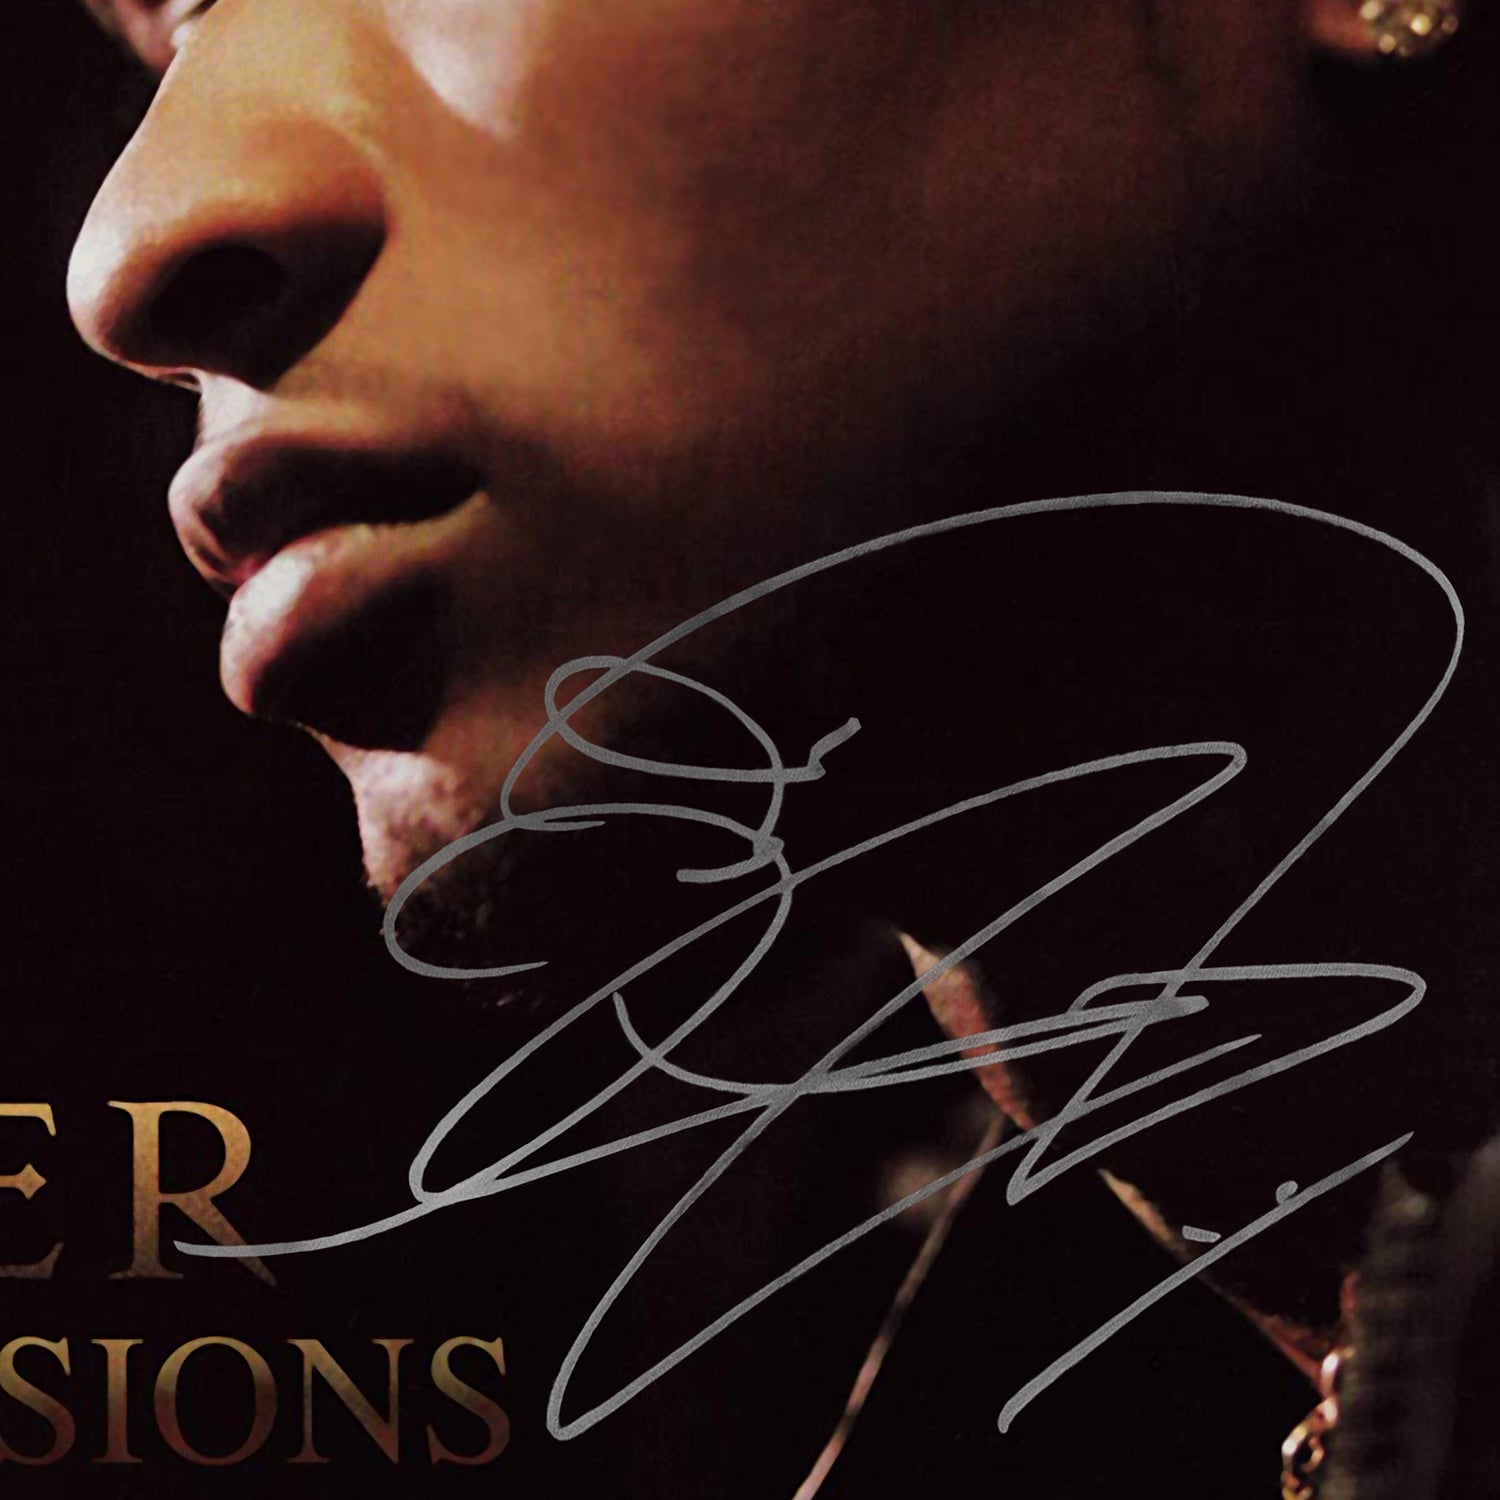 usher confessions album free mp3 download